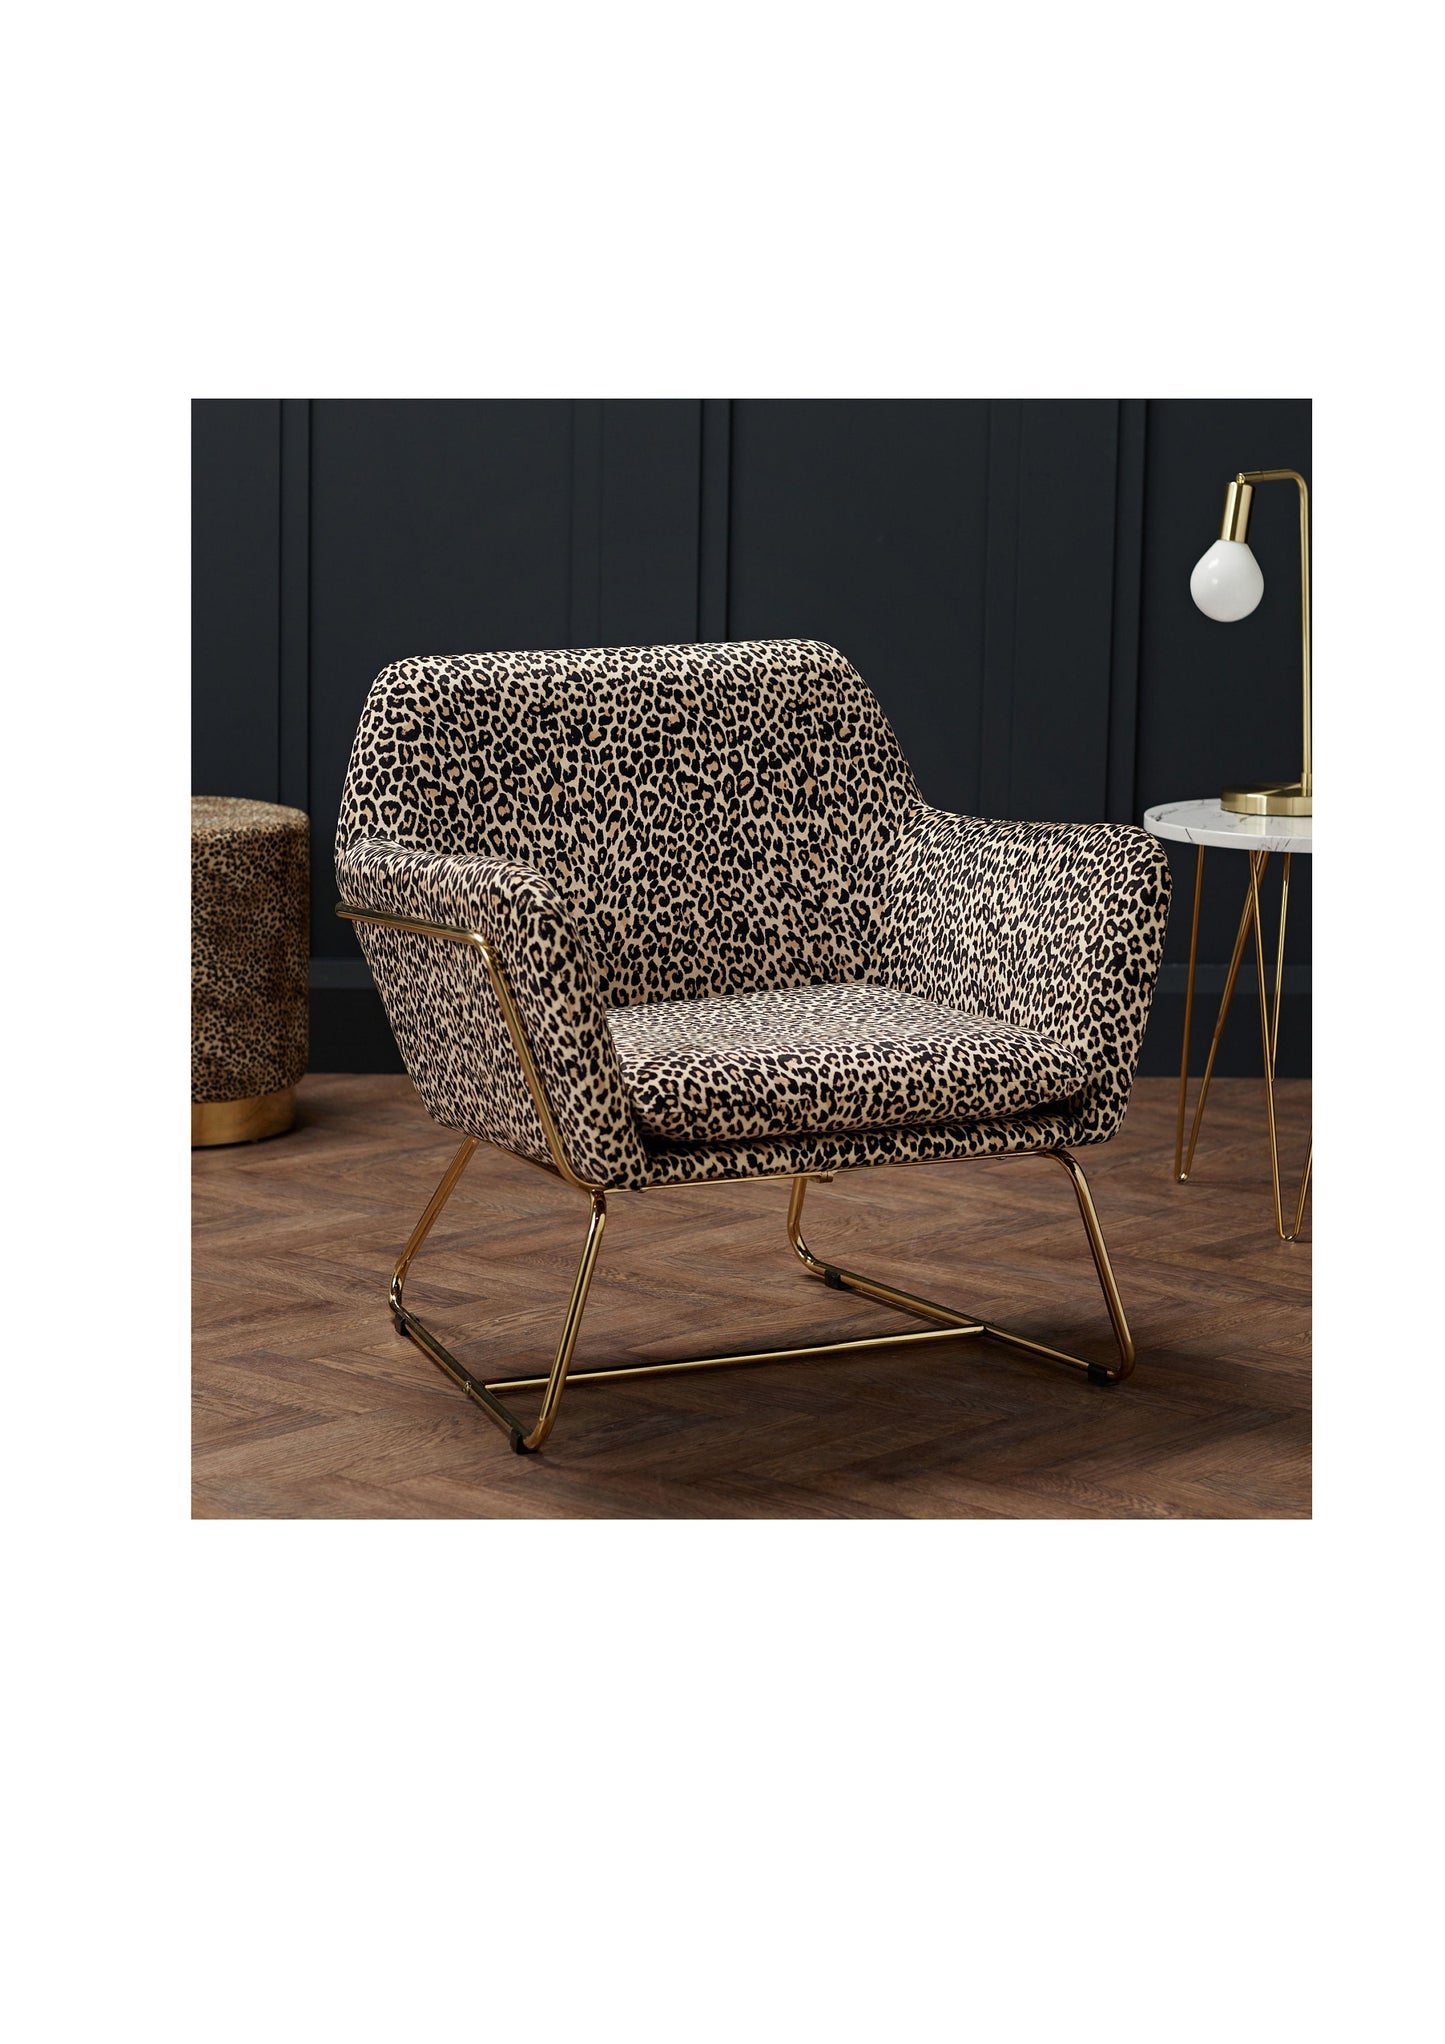 New Beautiful Elegant Leopard Print Armchair Lounge/ Bedroom Chair Pre Order for November